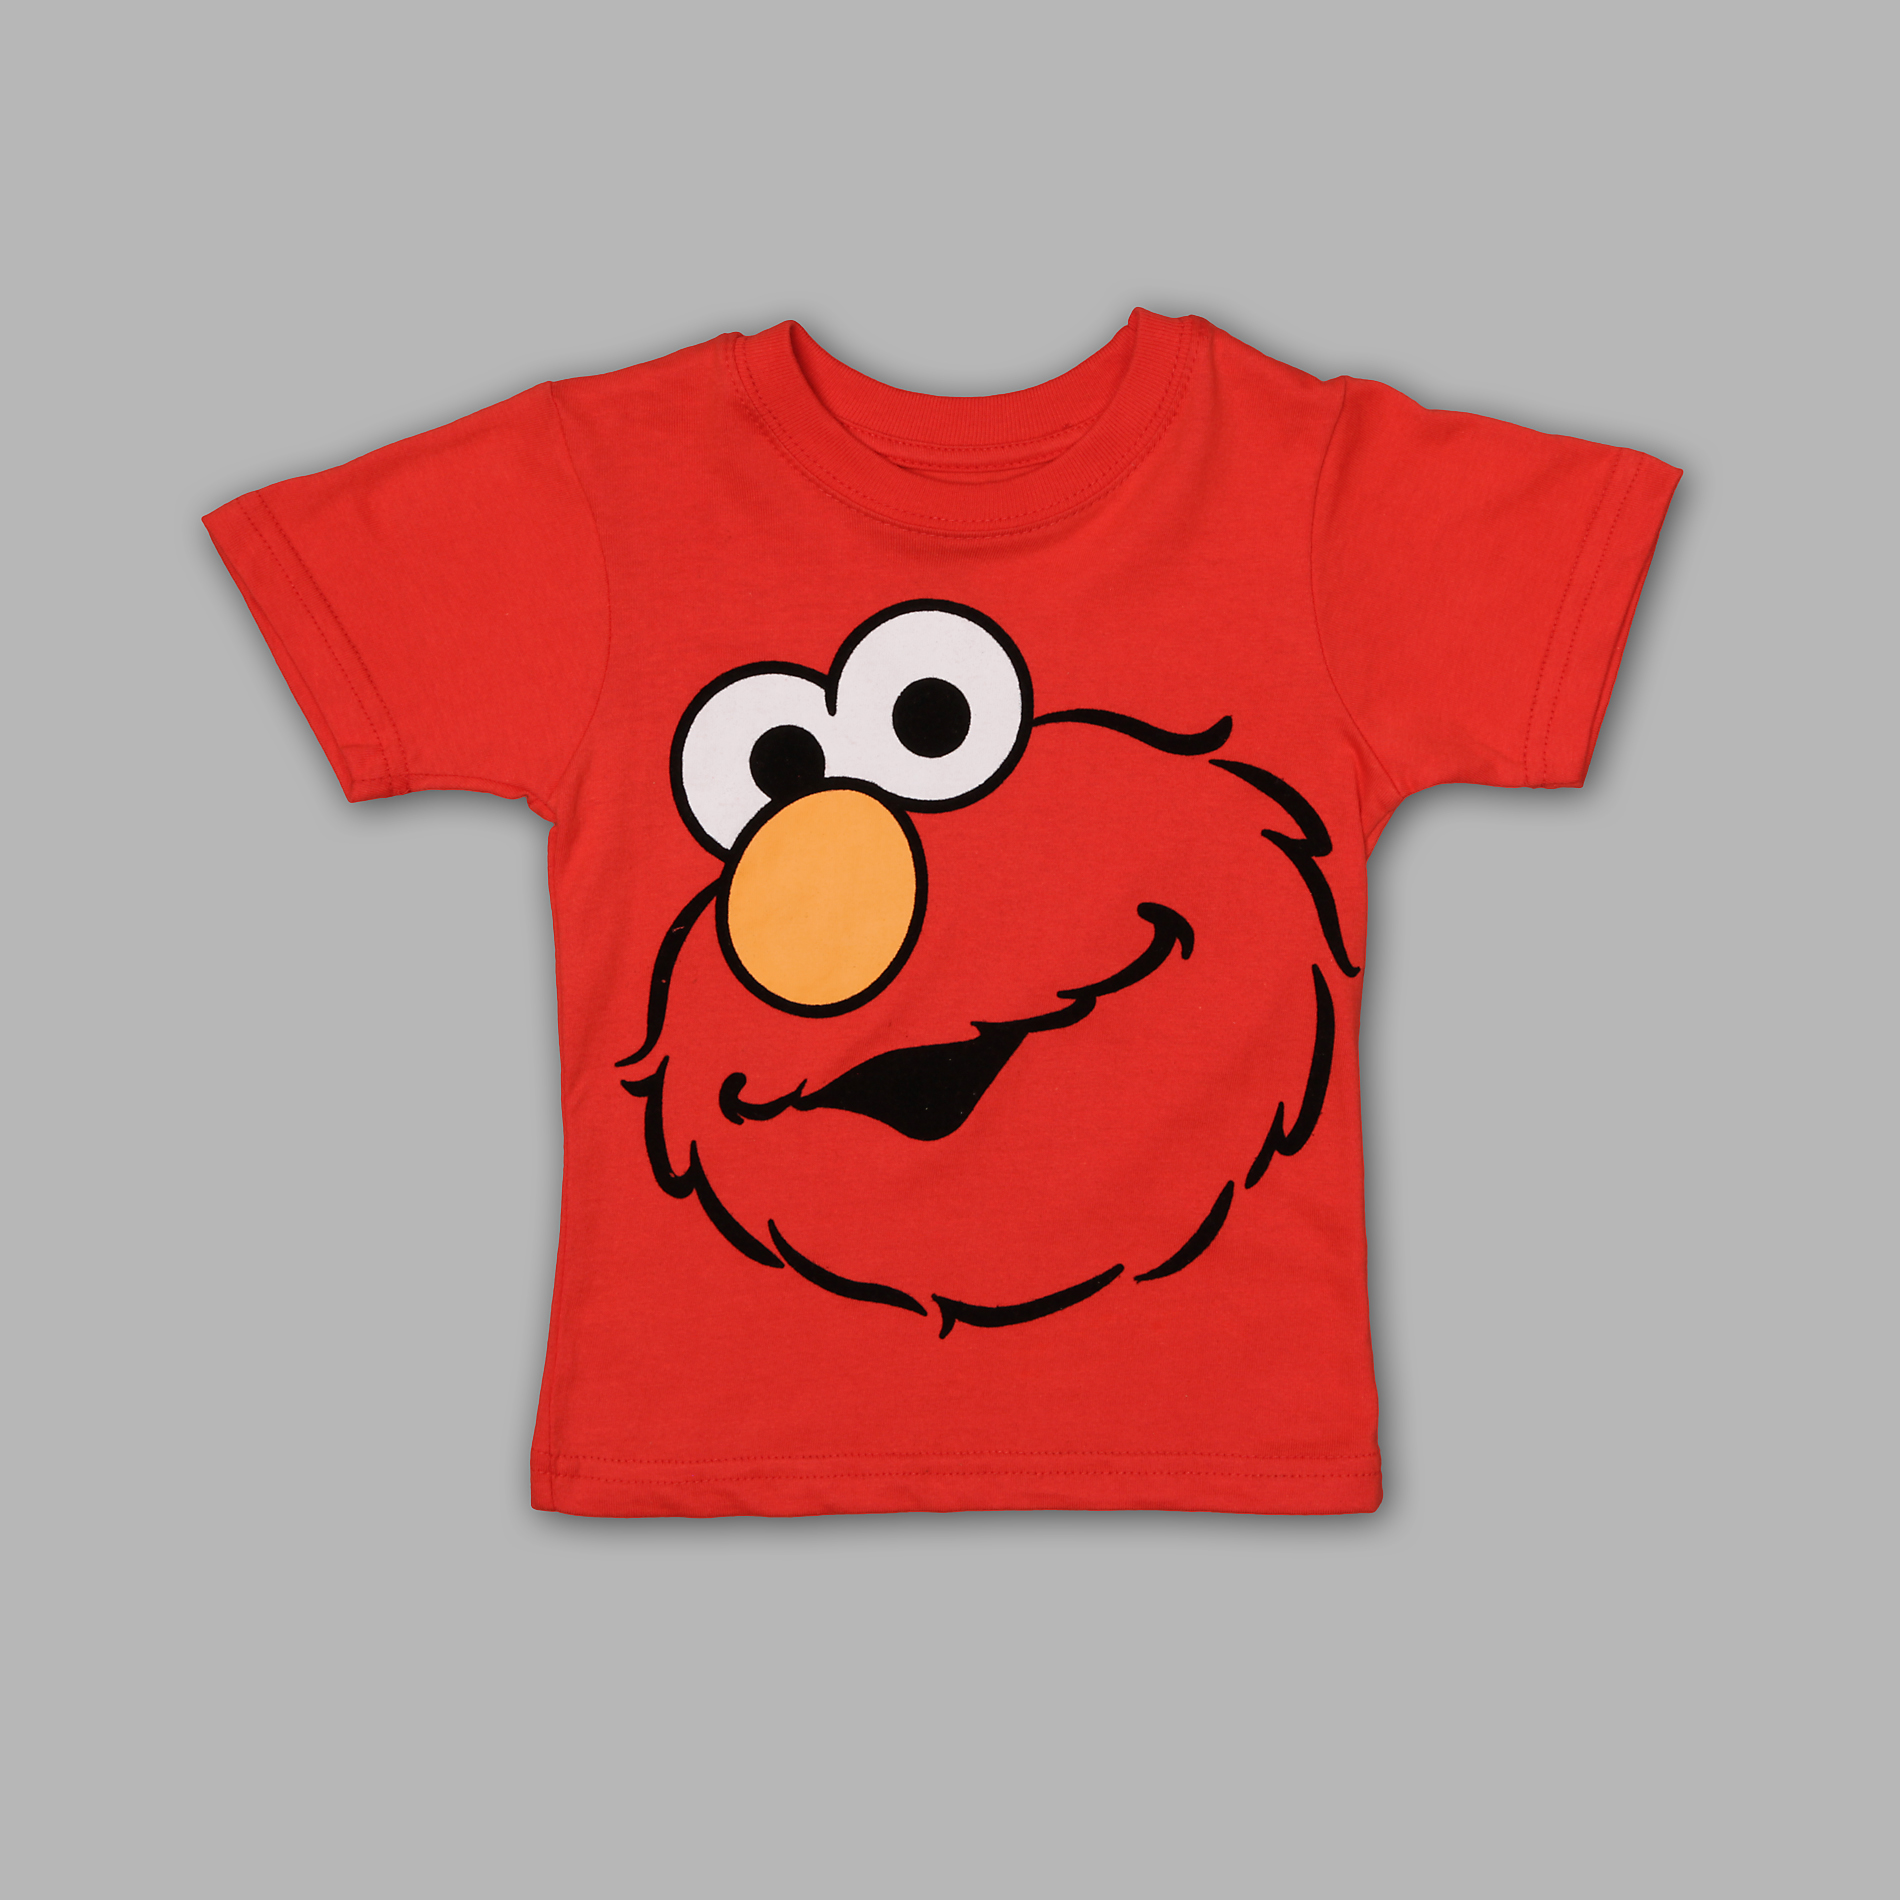 Sesame Street Infant & Toddler Big Face Elmo T-shirt